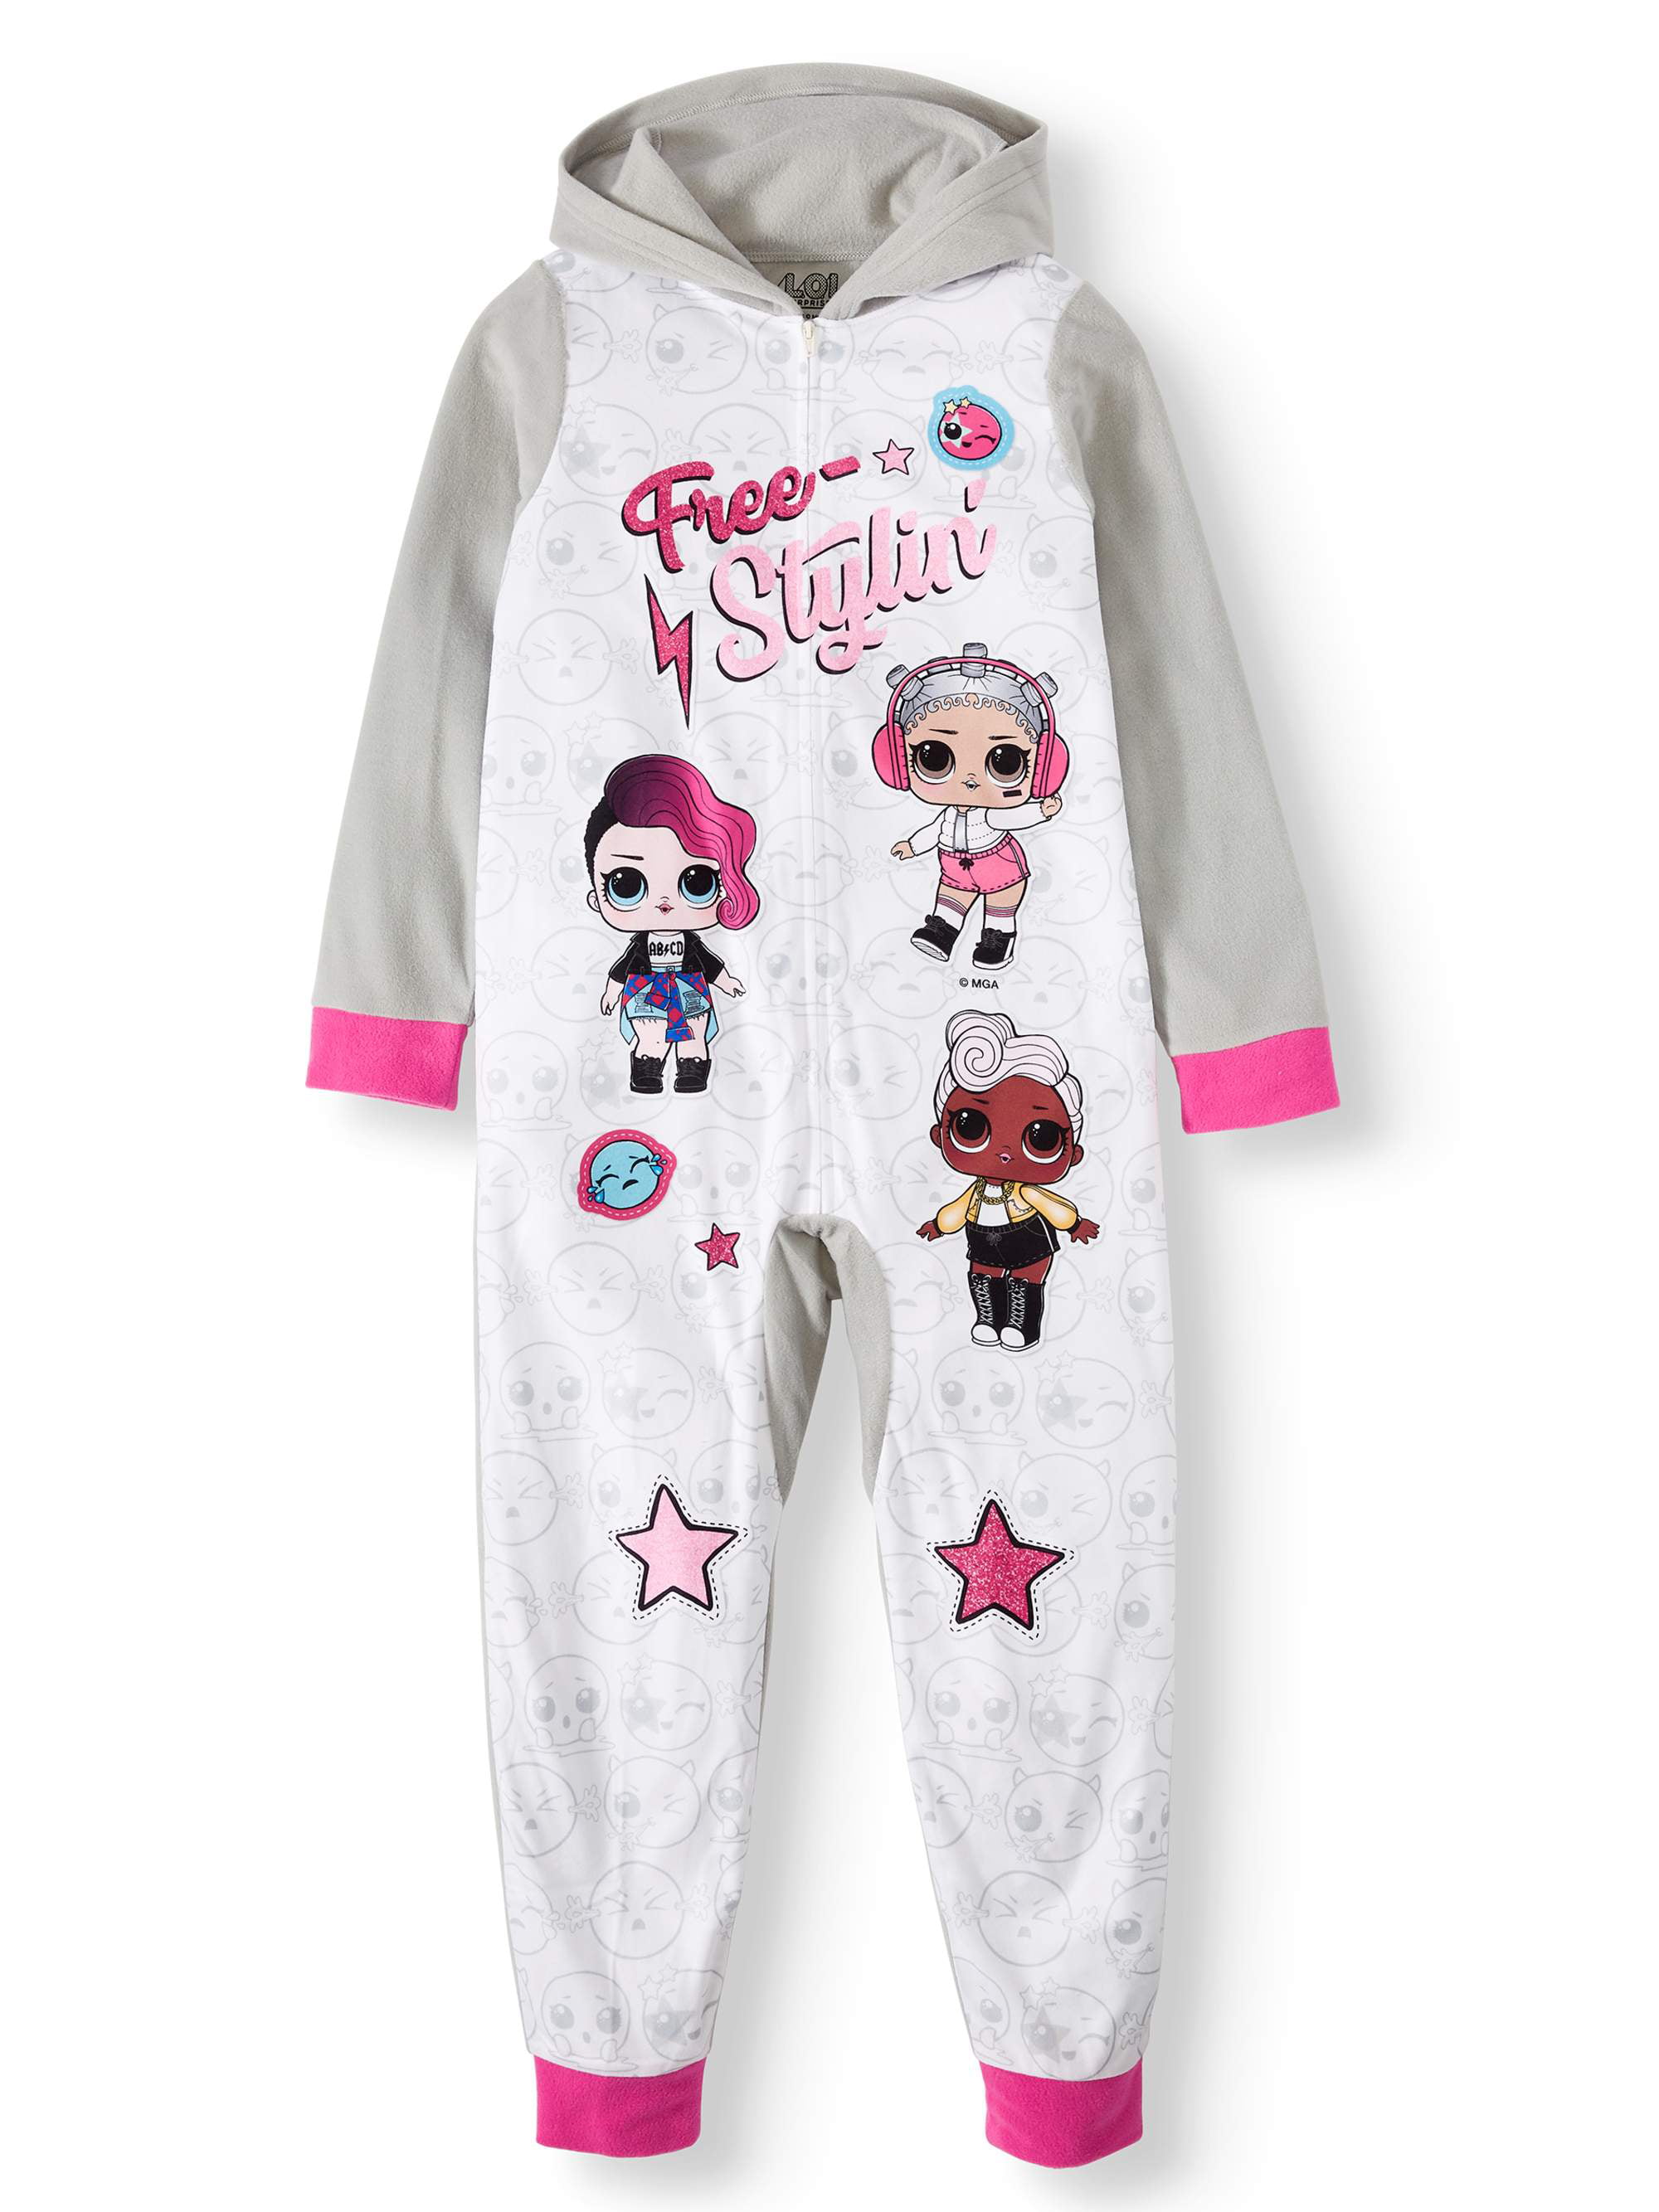 INTIMO Girls LOL Surprise Born to Be Bad Raglan Nightgown Pajamas Sleep Shirt